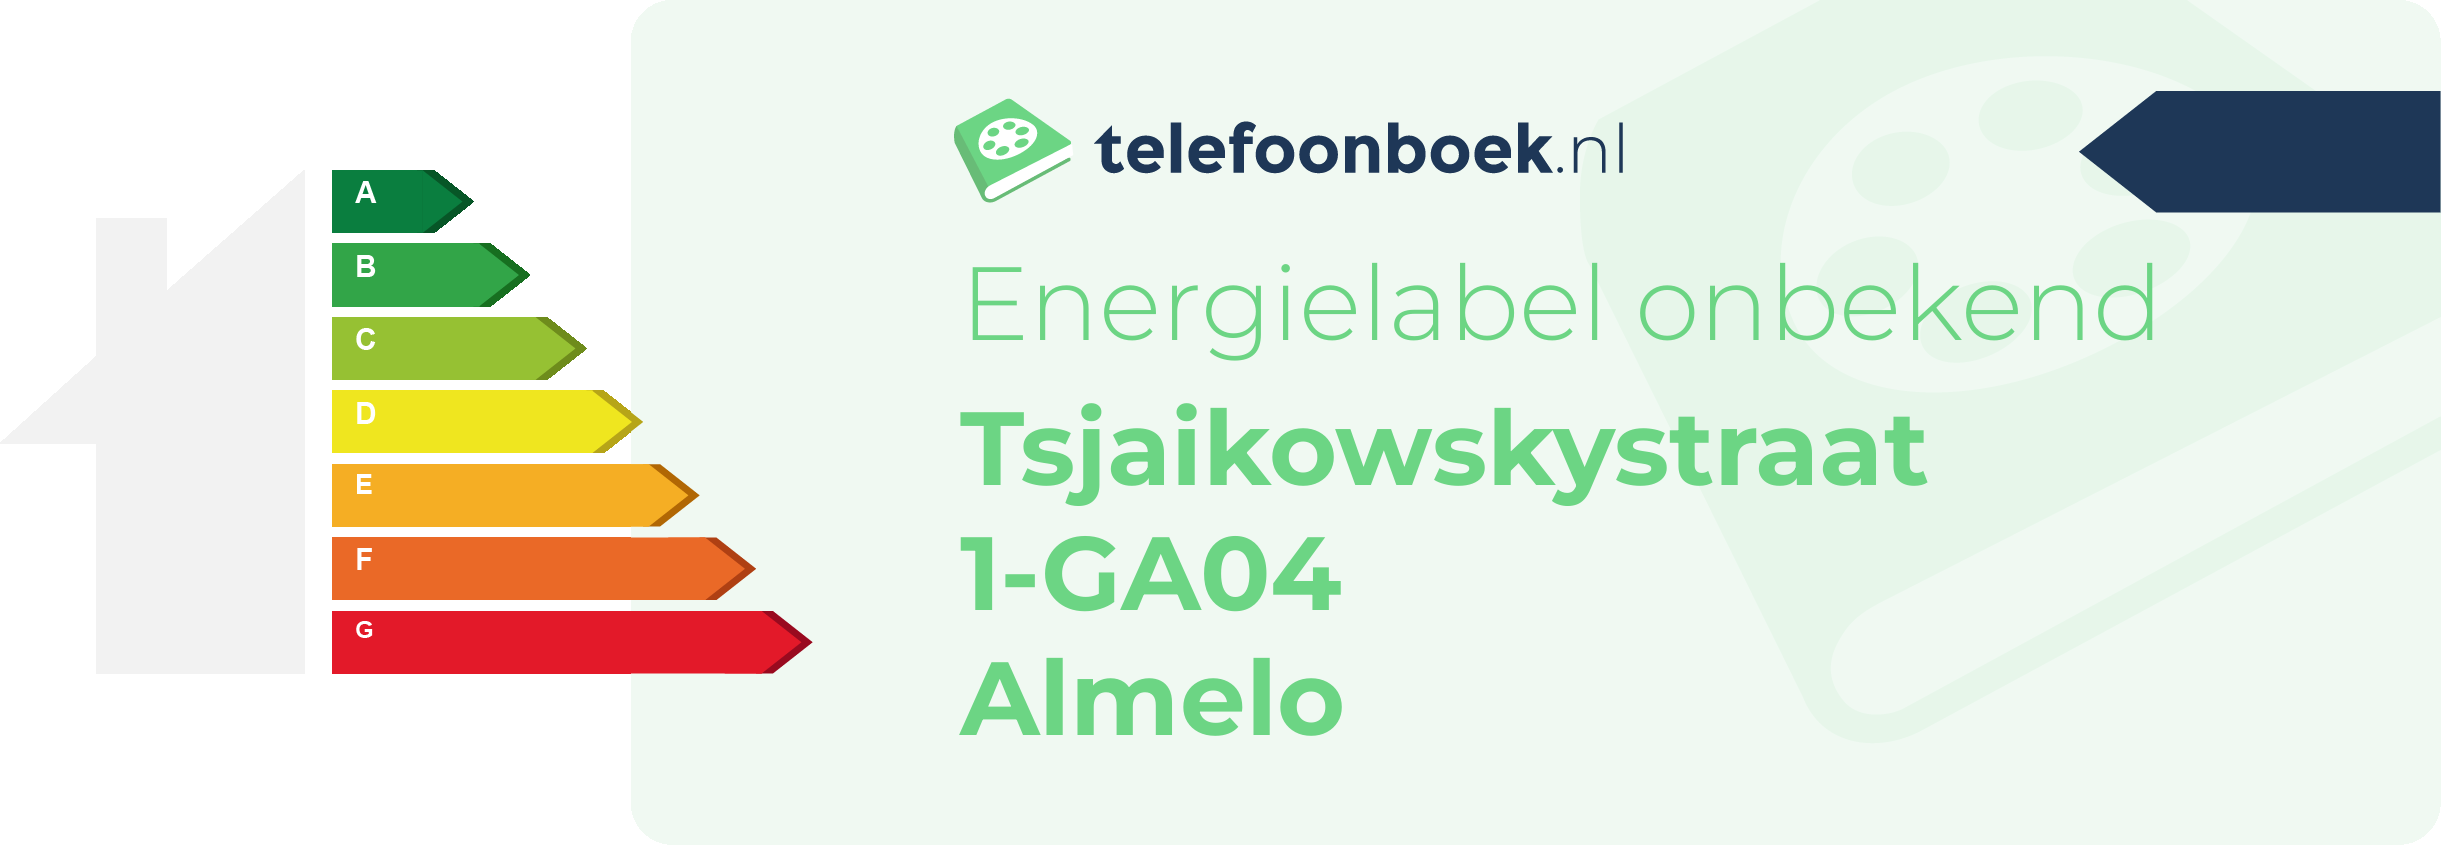 Energielabel Tsjaikowskystraat 1-GA04 Almelo